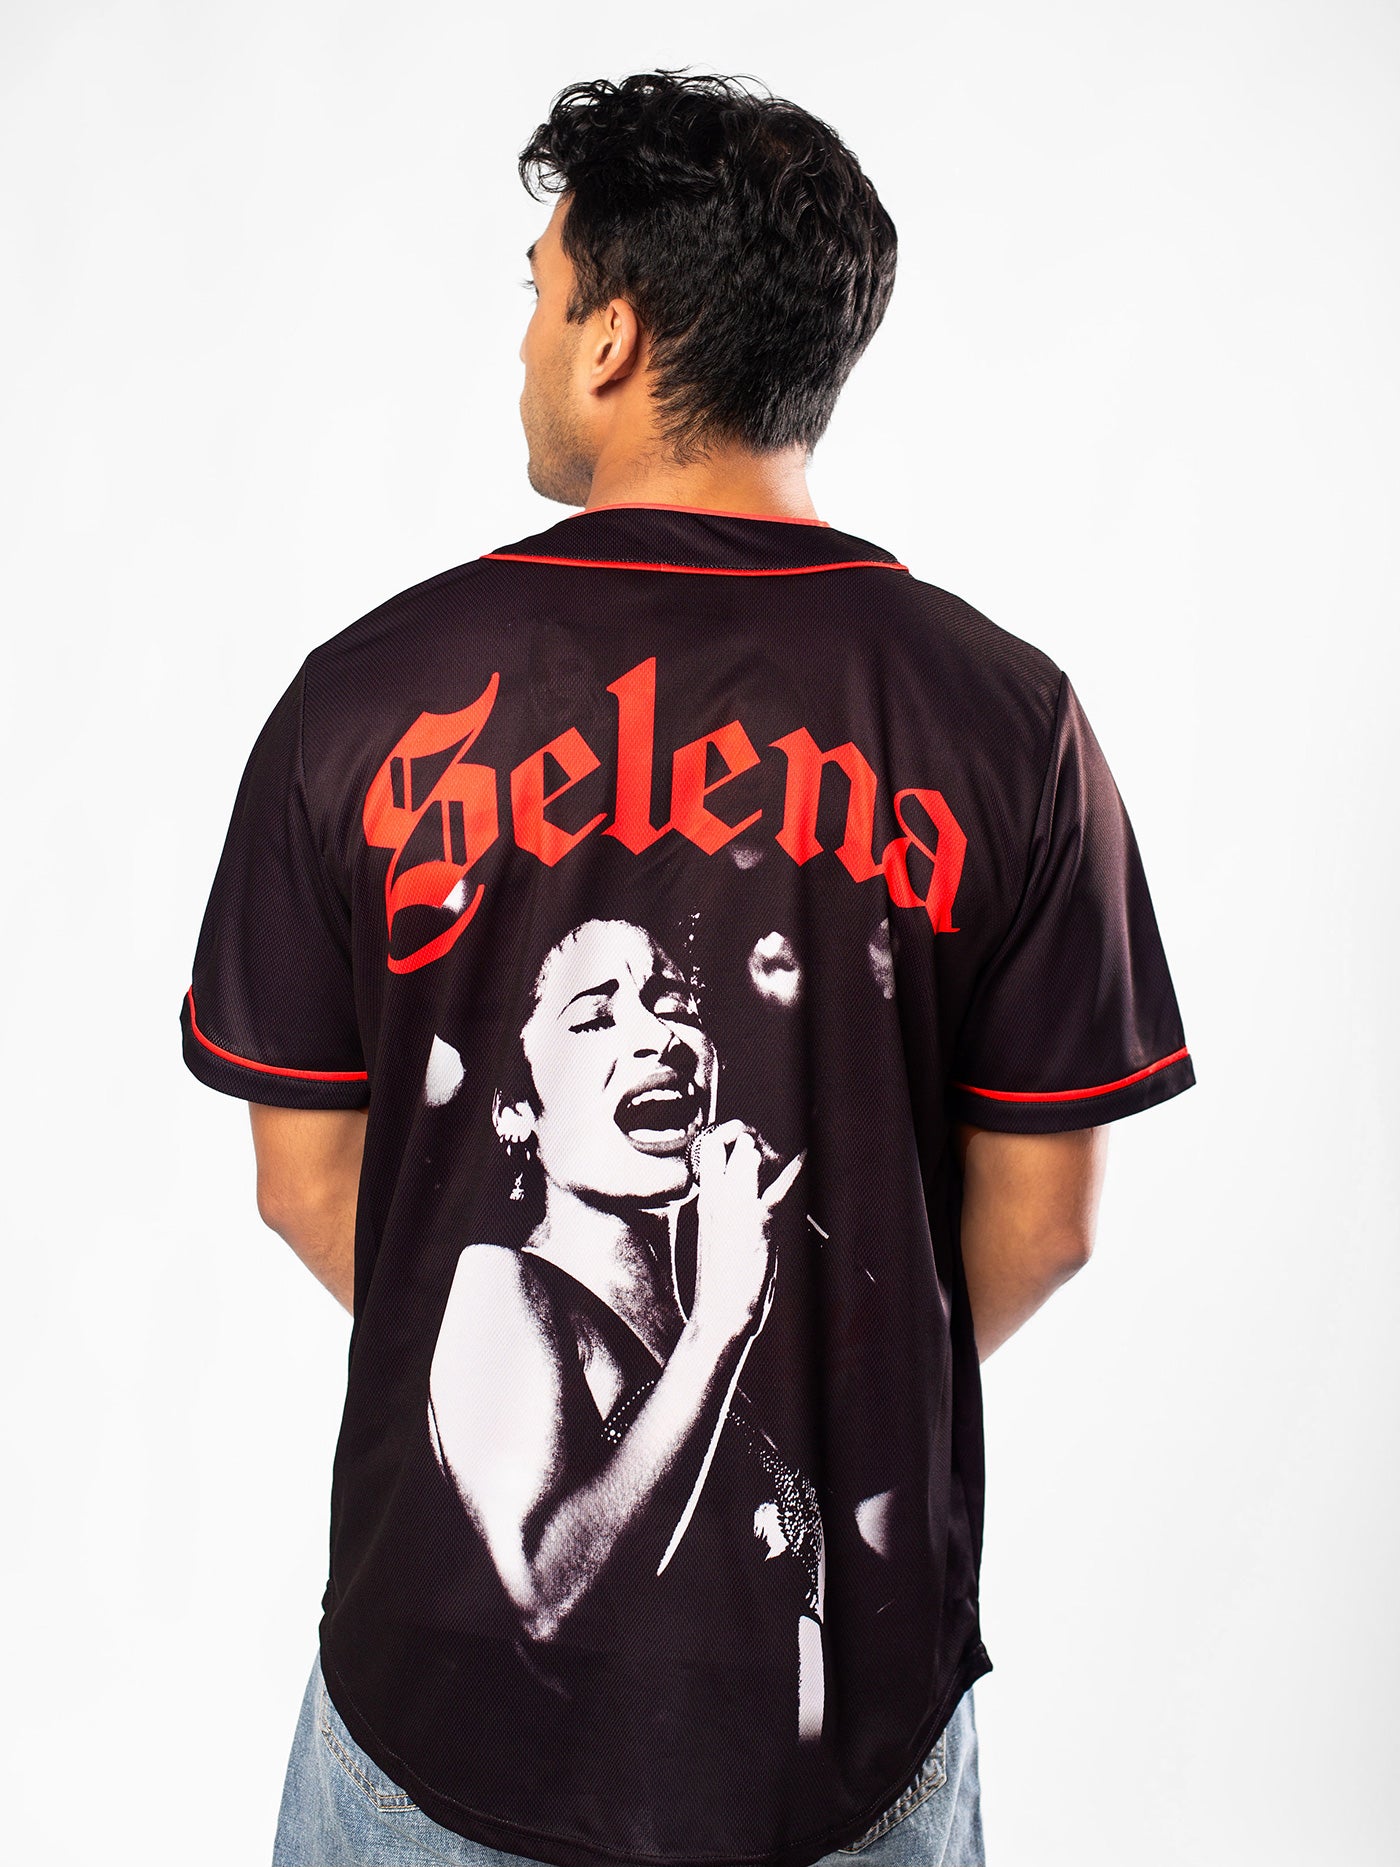 Selena Graphic Black Baseball Jersey